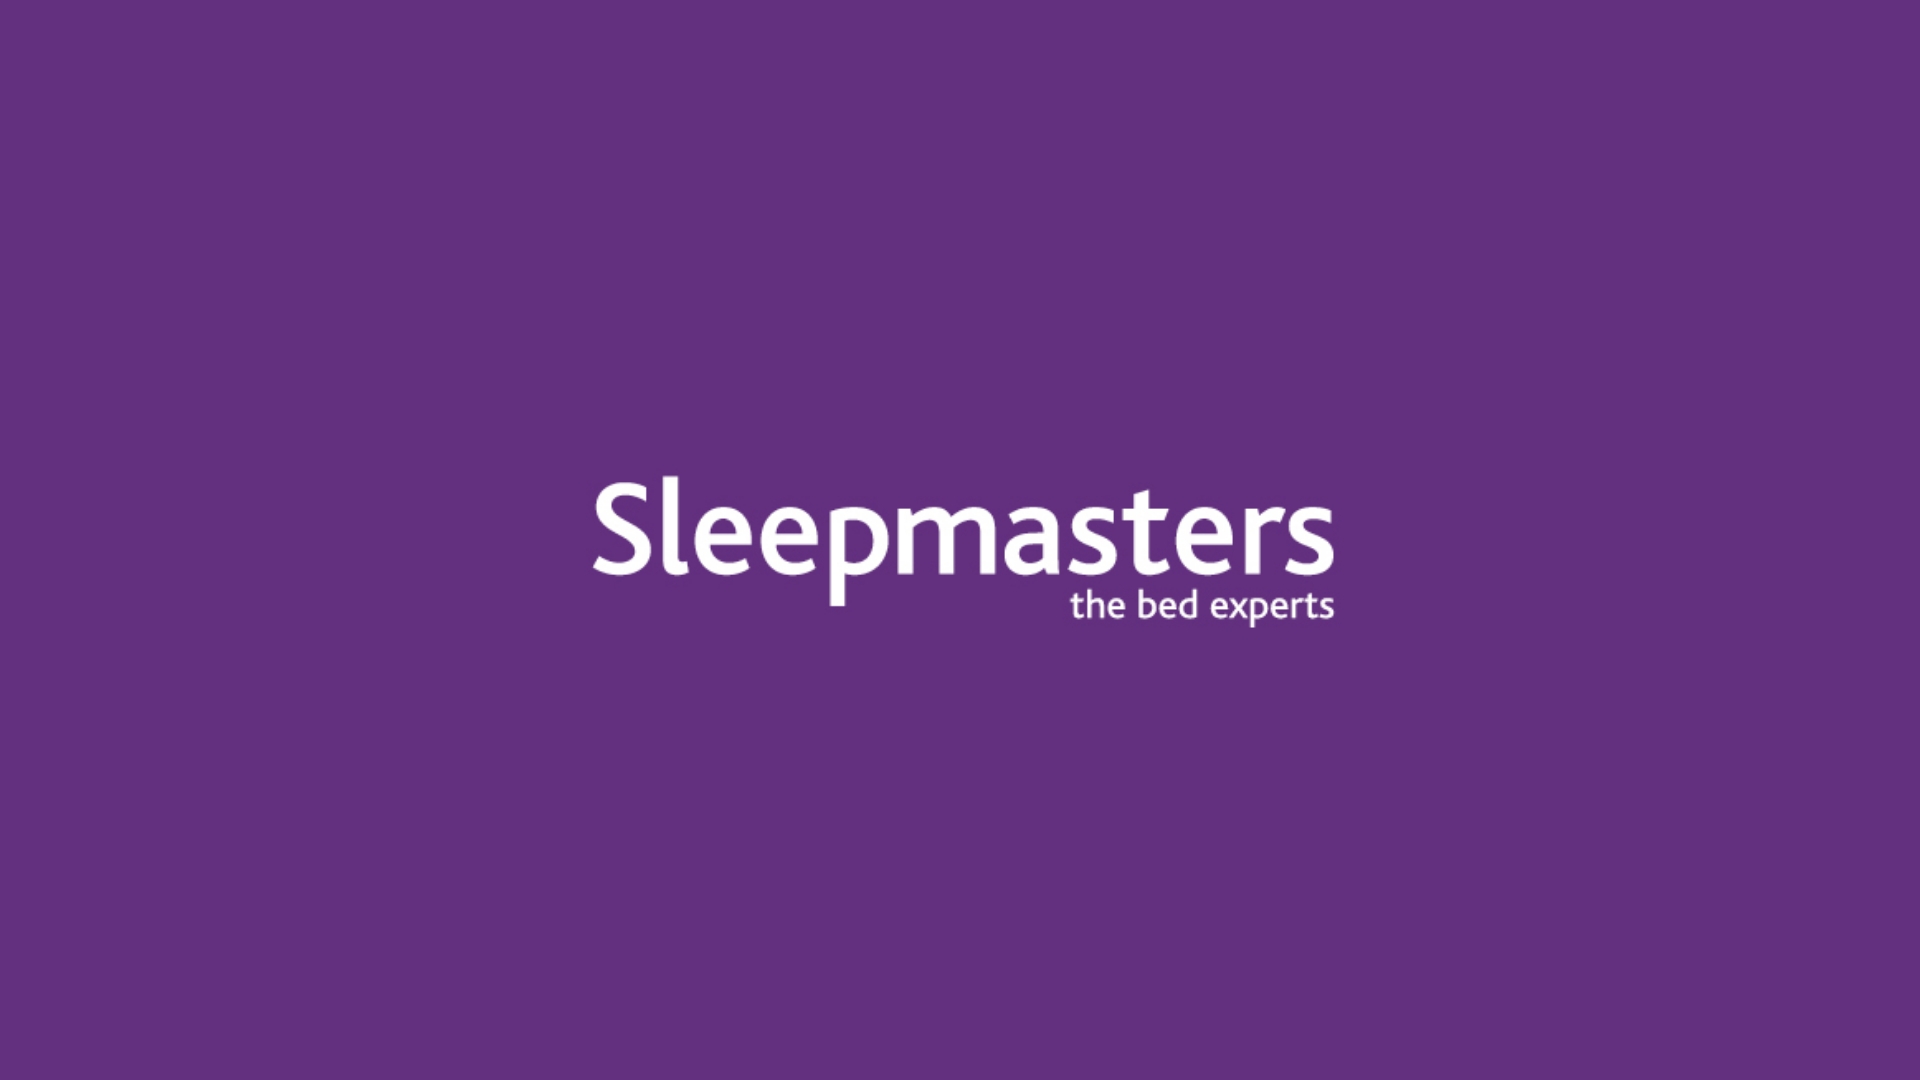 Sleepmasters